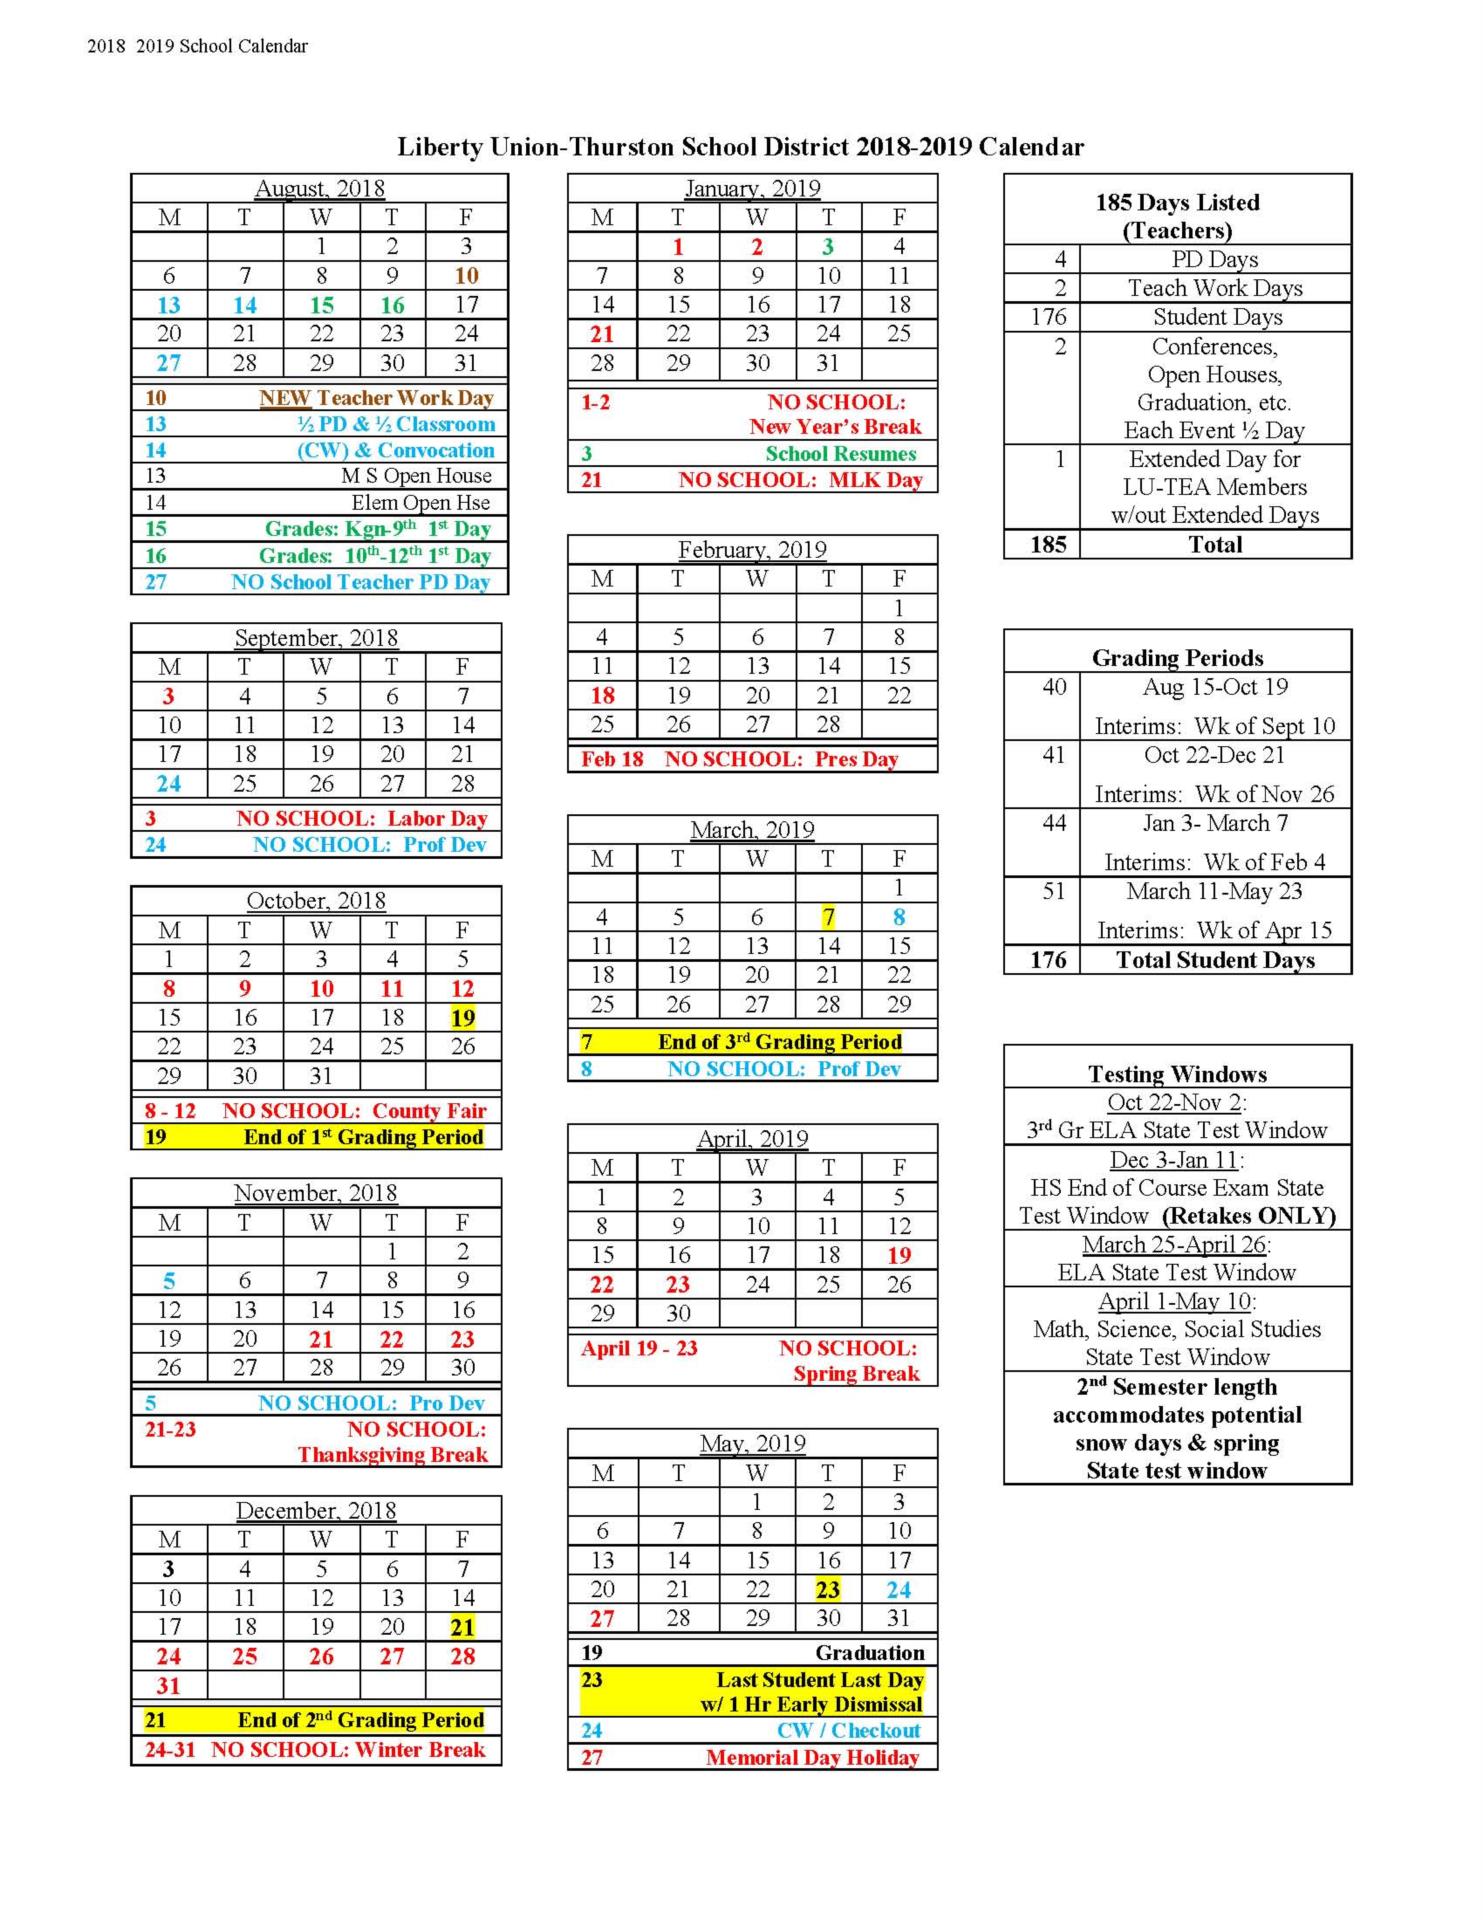 luhs-calendar